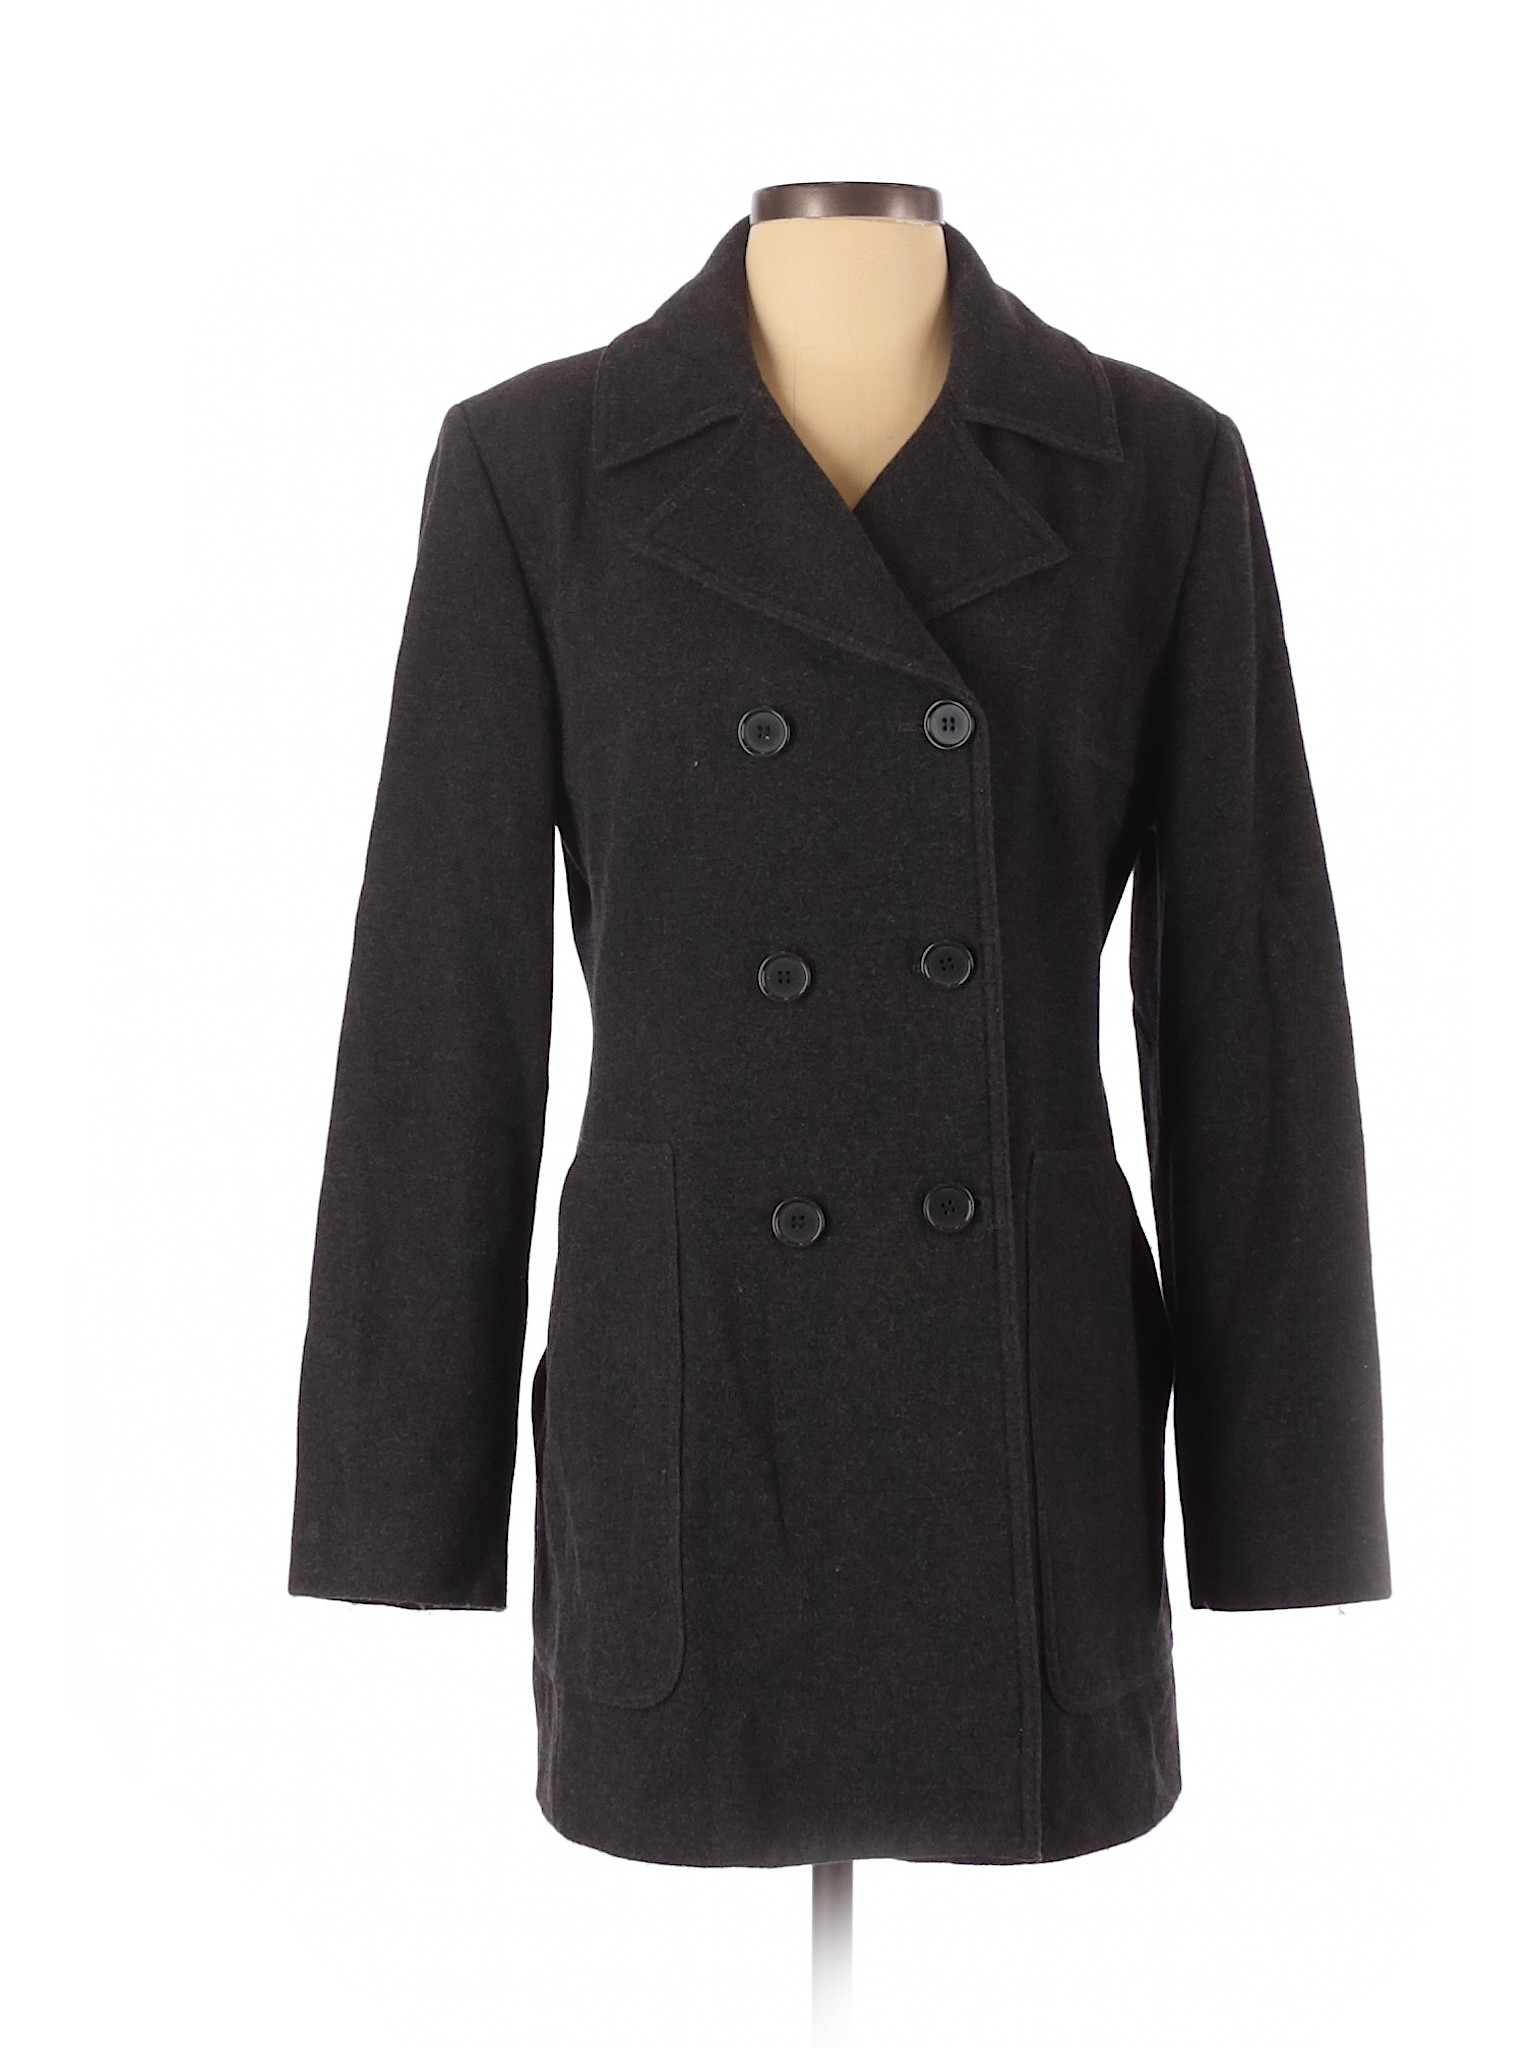 United Colors Of Benetton Women Black Coat S | eBay